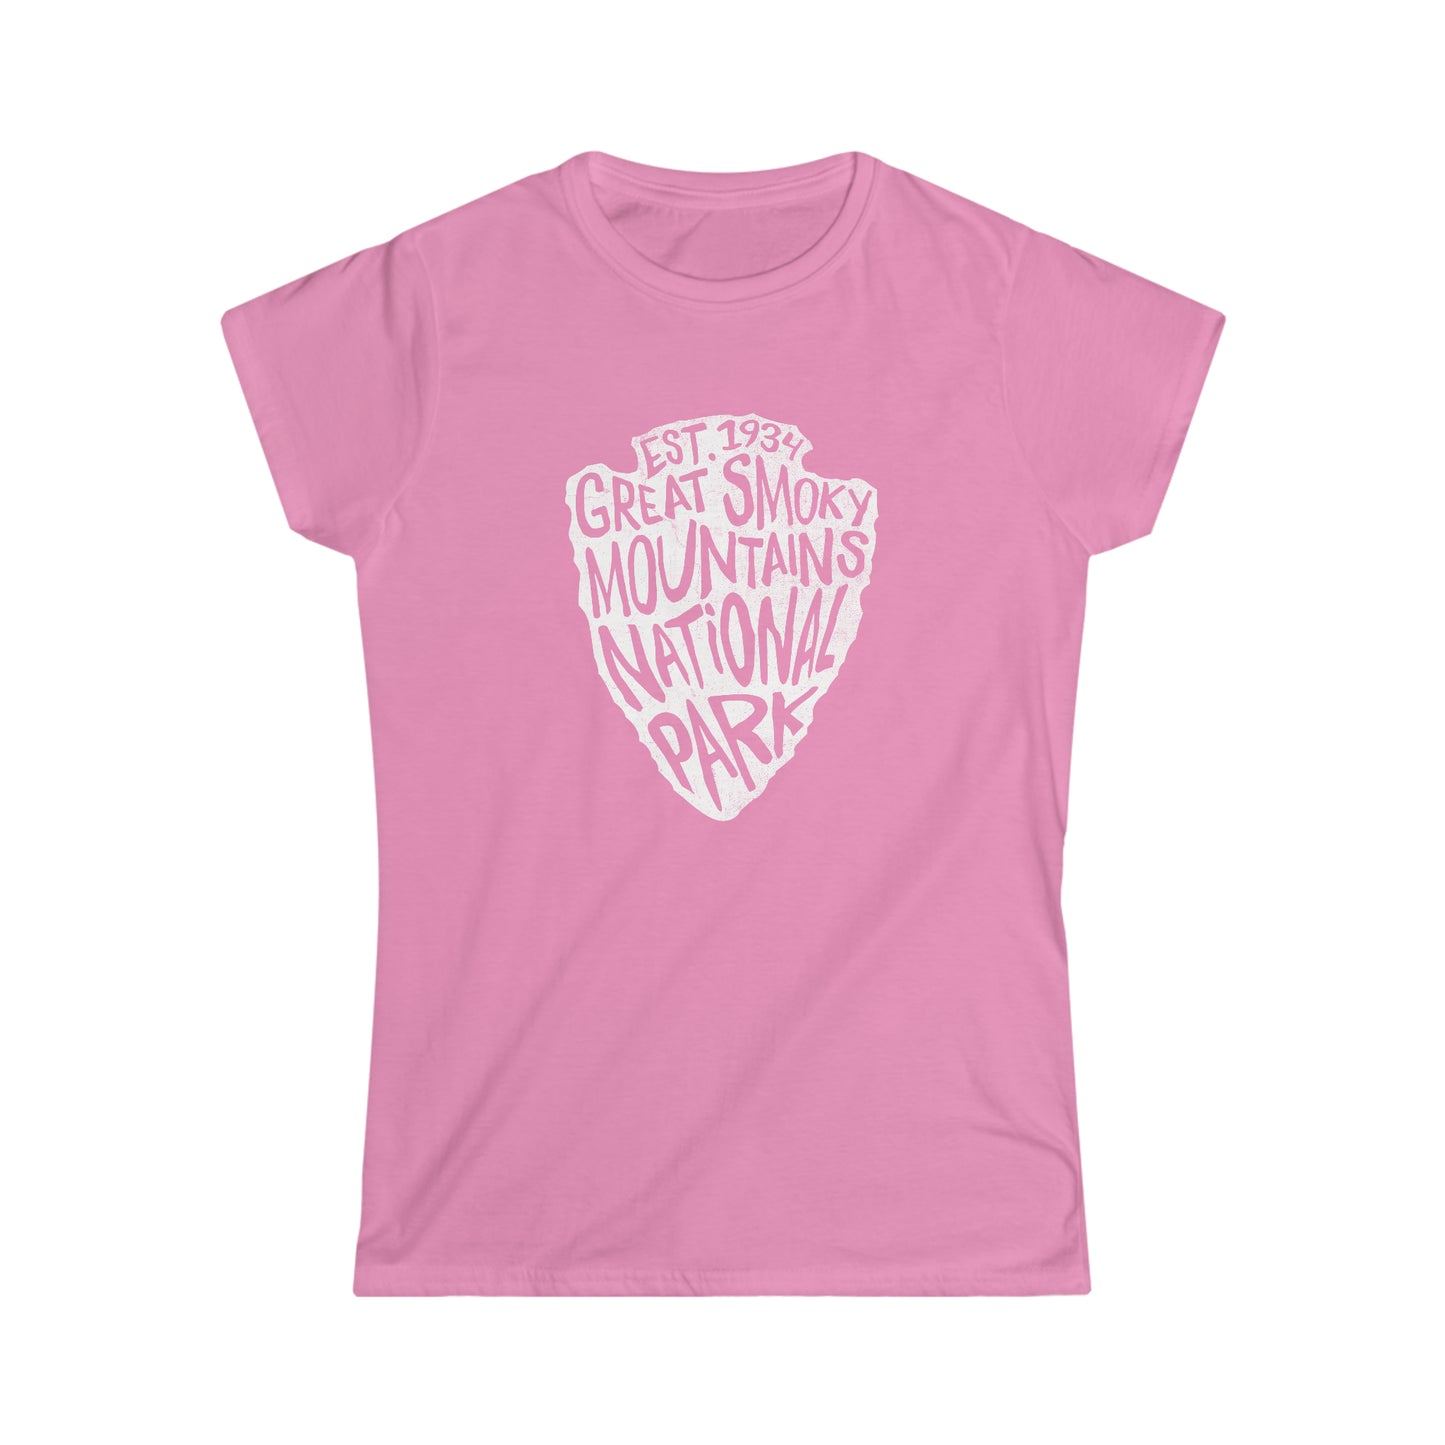 Great Smoky Mountains National Park Women's T-Shirt - Arrowhead Design